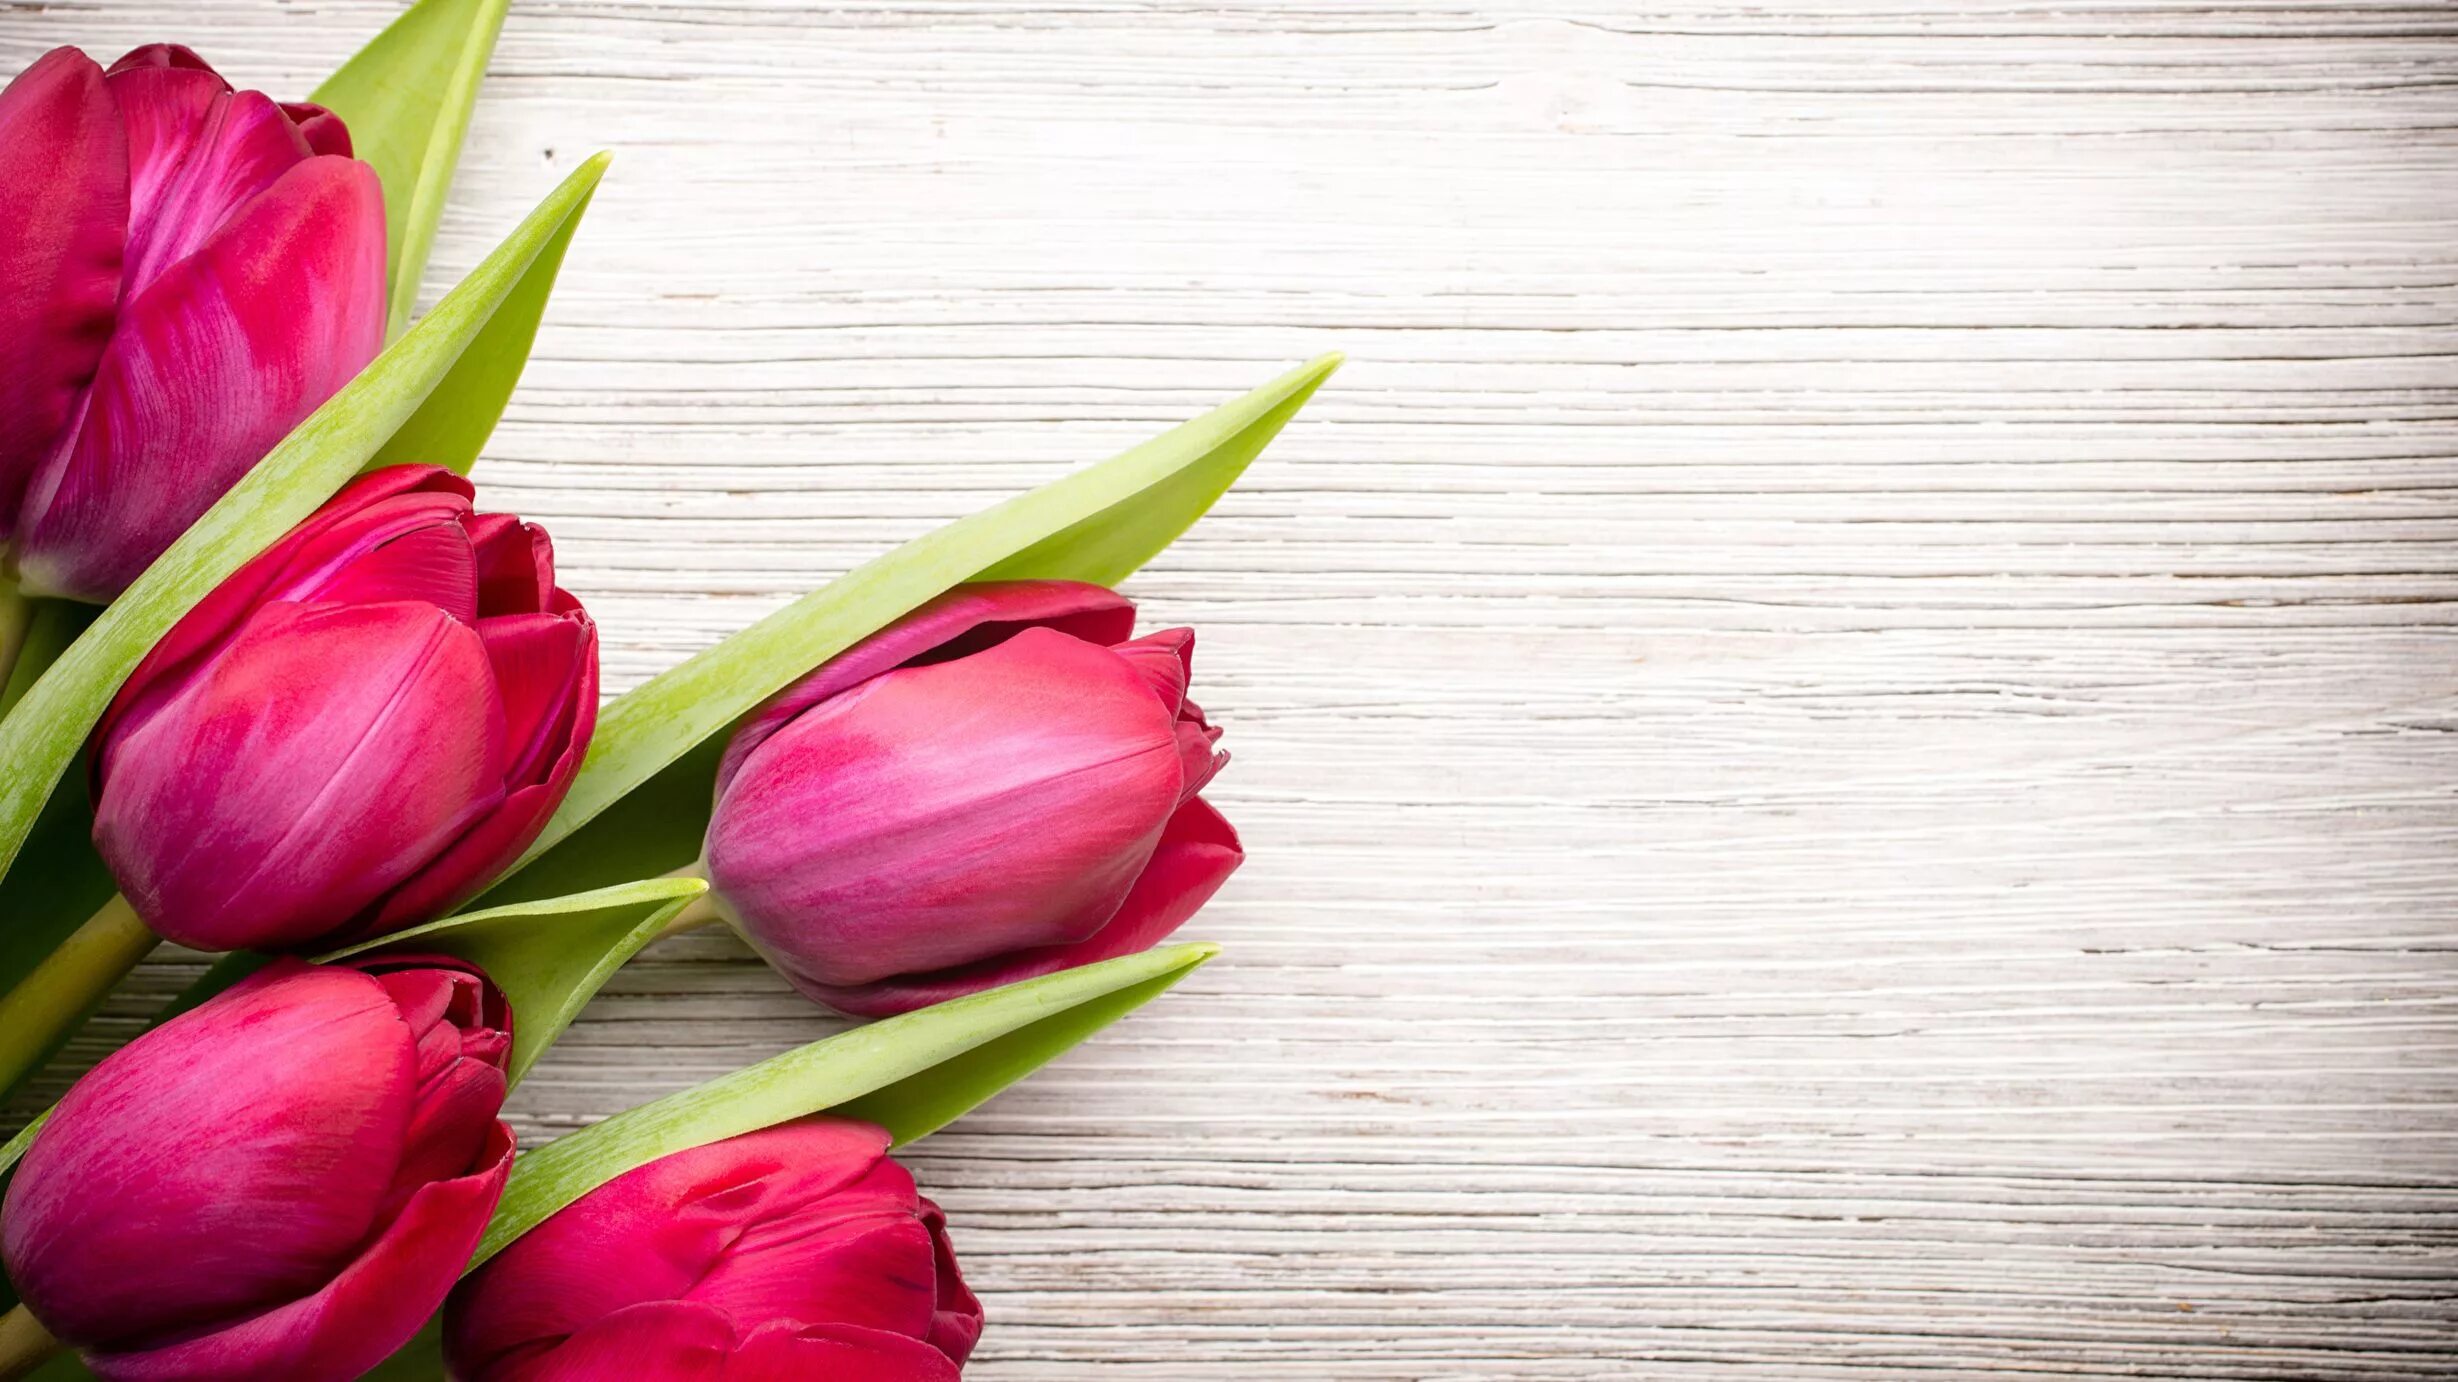 Тюльпаны открытка. Тюльпаны фон. Красивые тюльпаны. Весенние цветы тюльпаны. Обои на телефон красивые тюльпаны